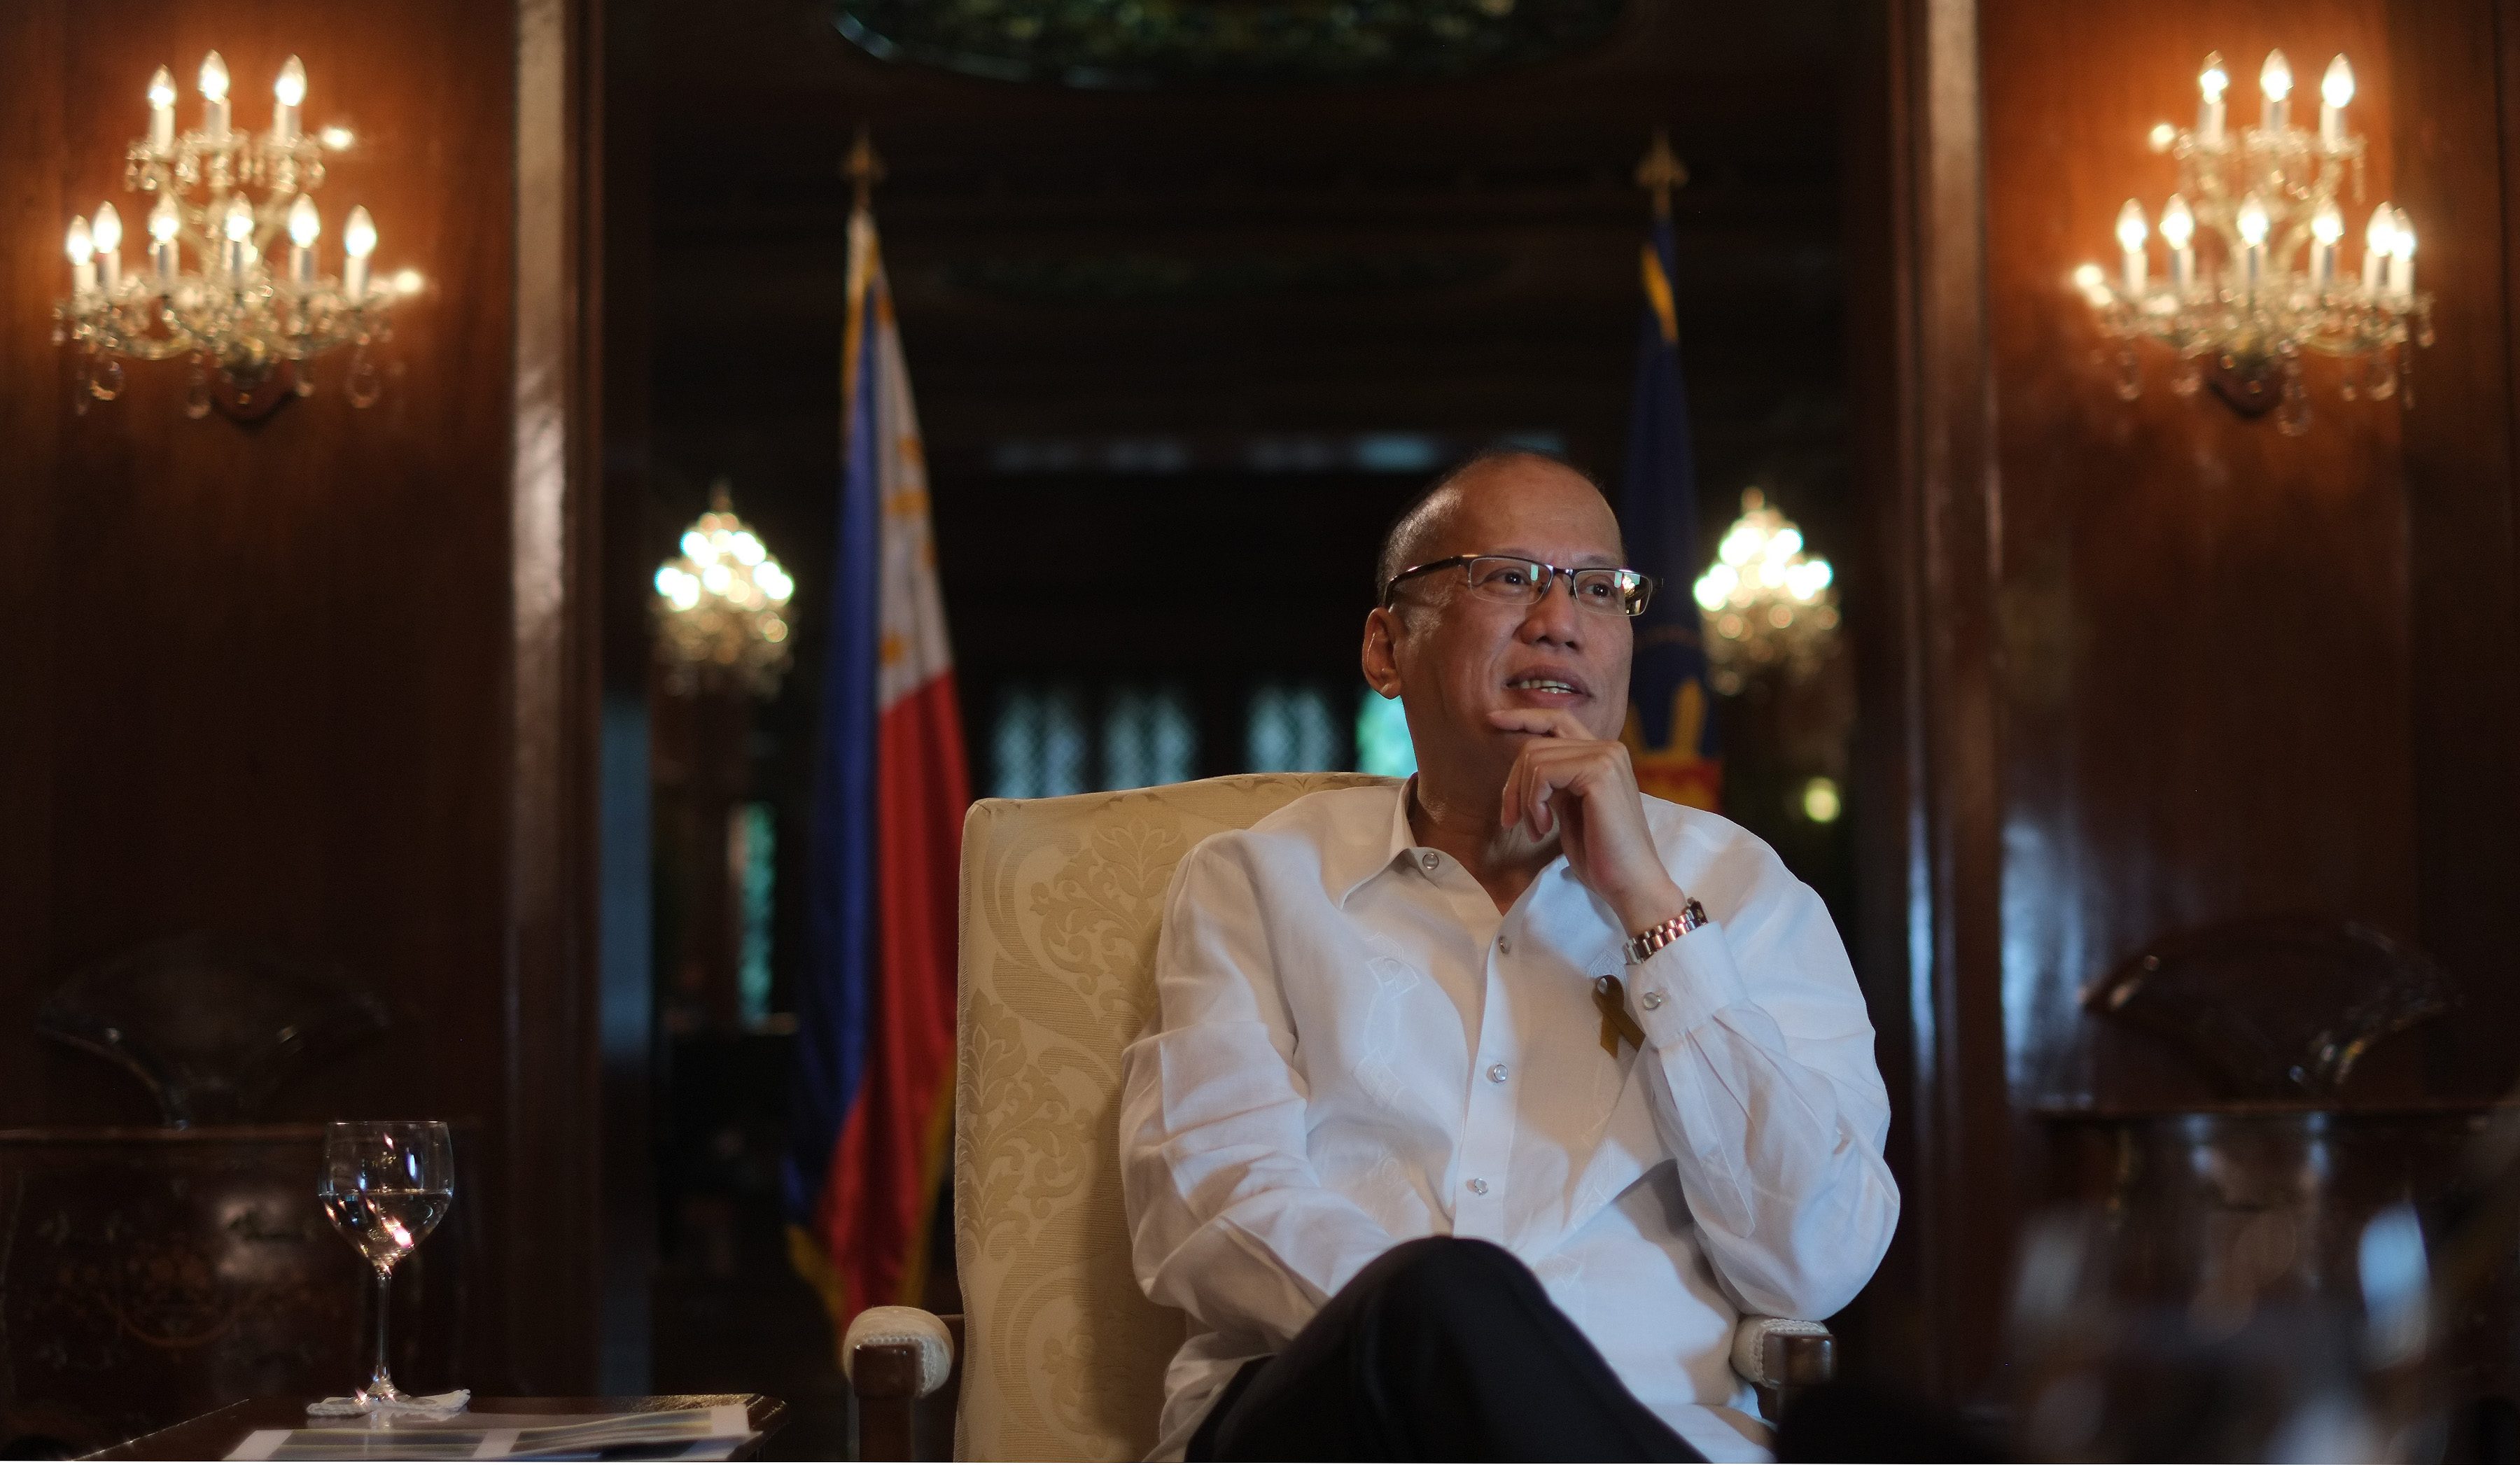 1Sambayan wants presidential bet to embody PNoy’s ‘honest’ governance